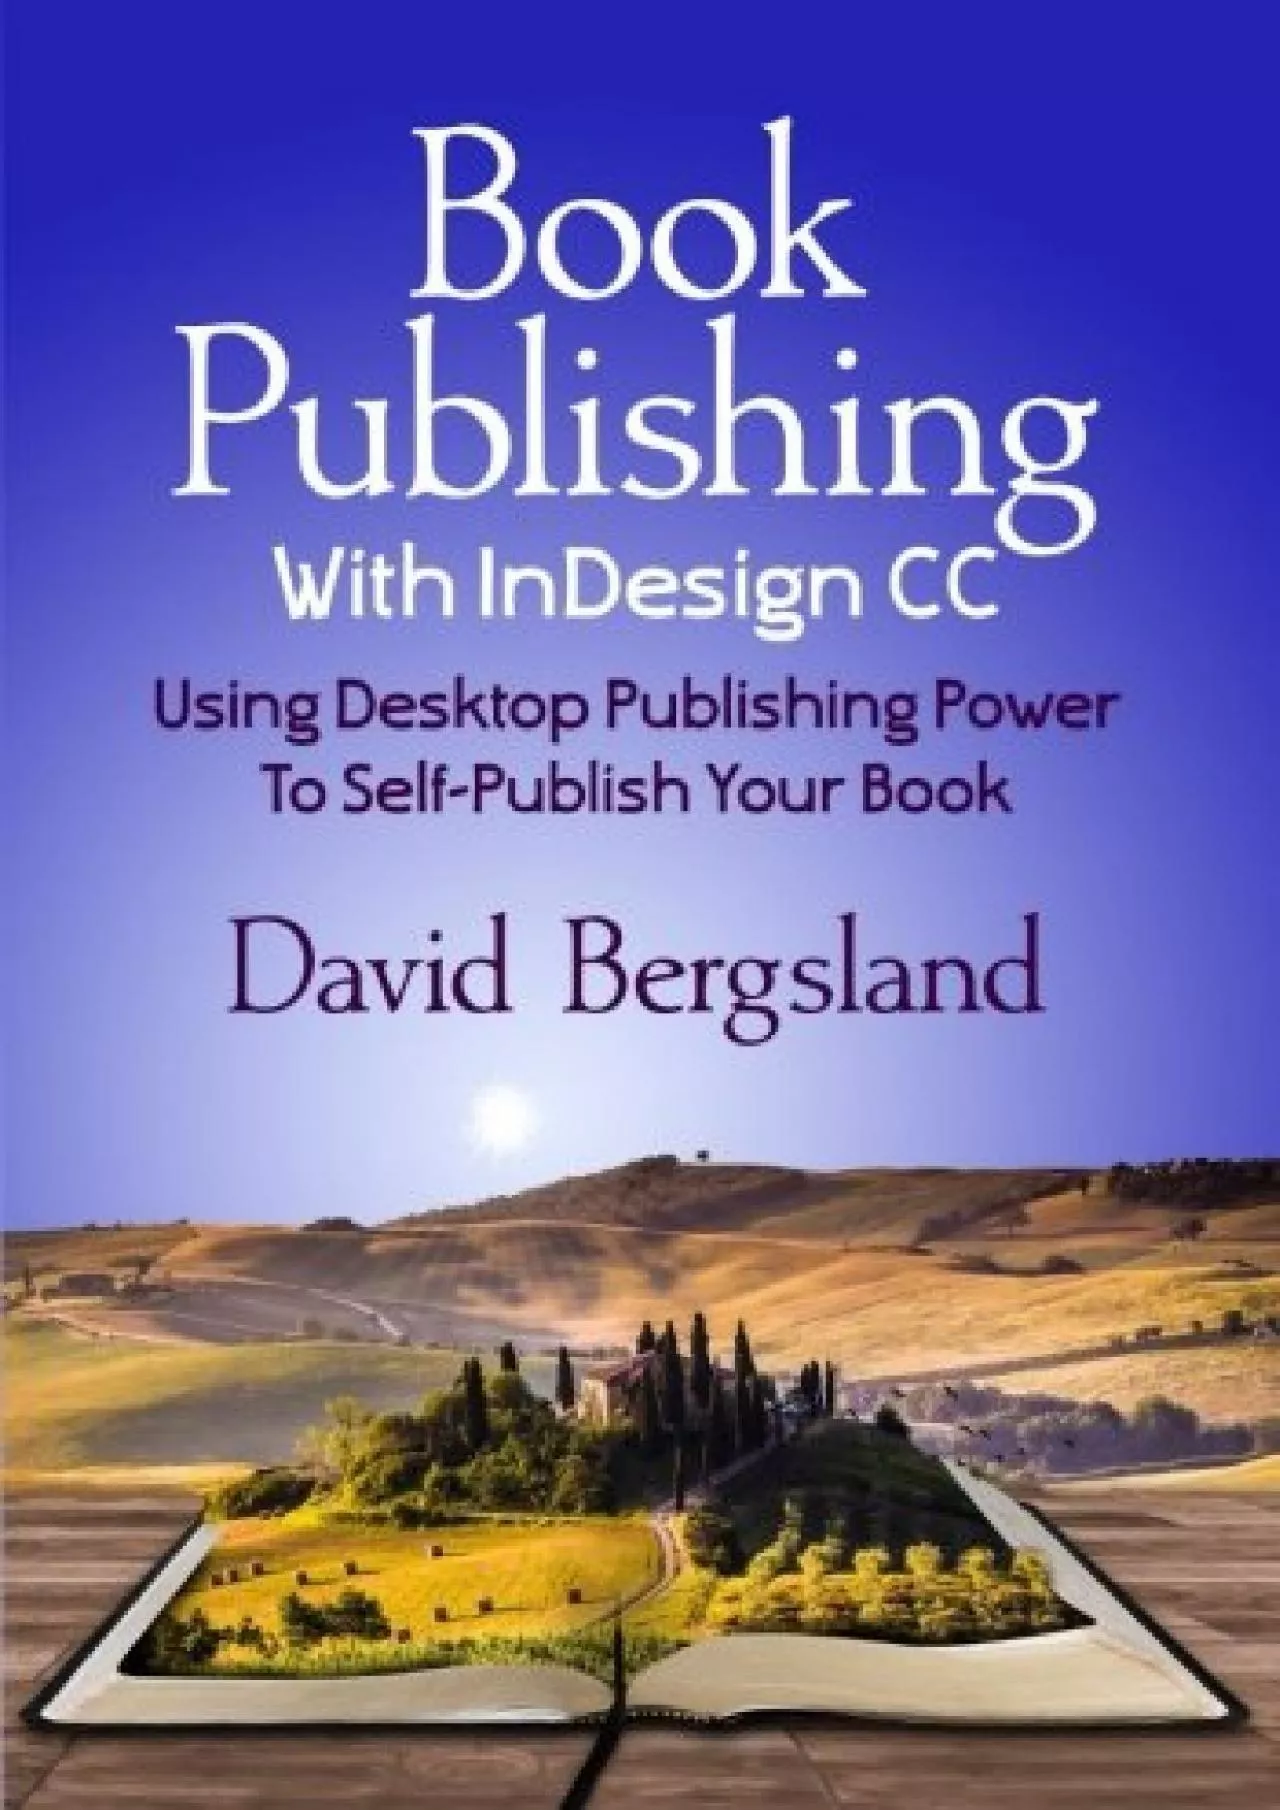 (EBOOK)-Book Publishing With InDesign CC: Using Desktop Publishing Power To Self-Publish